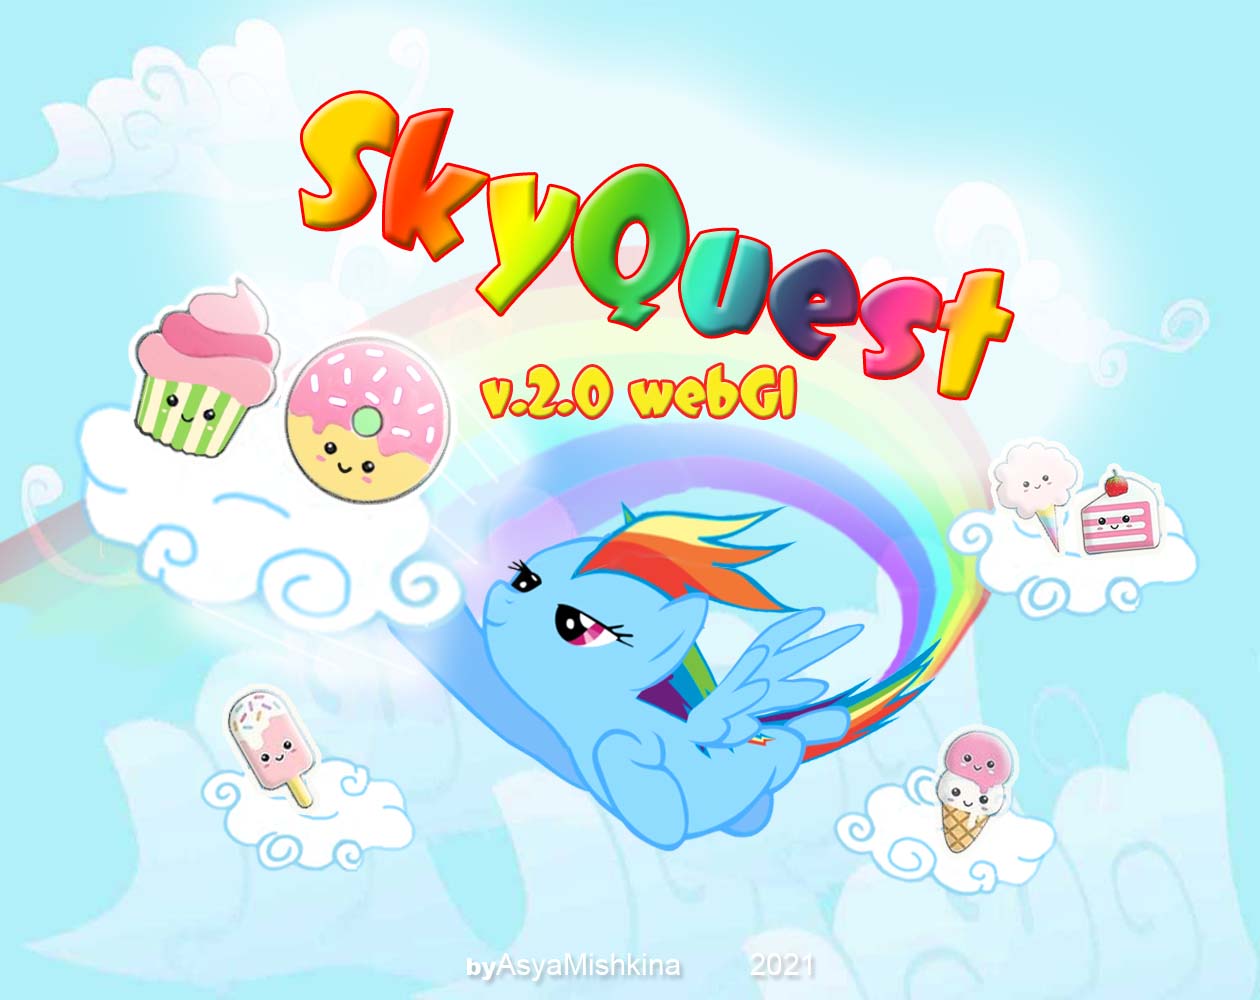 SkyQuest v2.0webGl